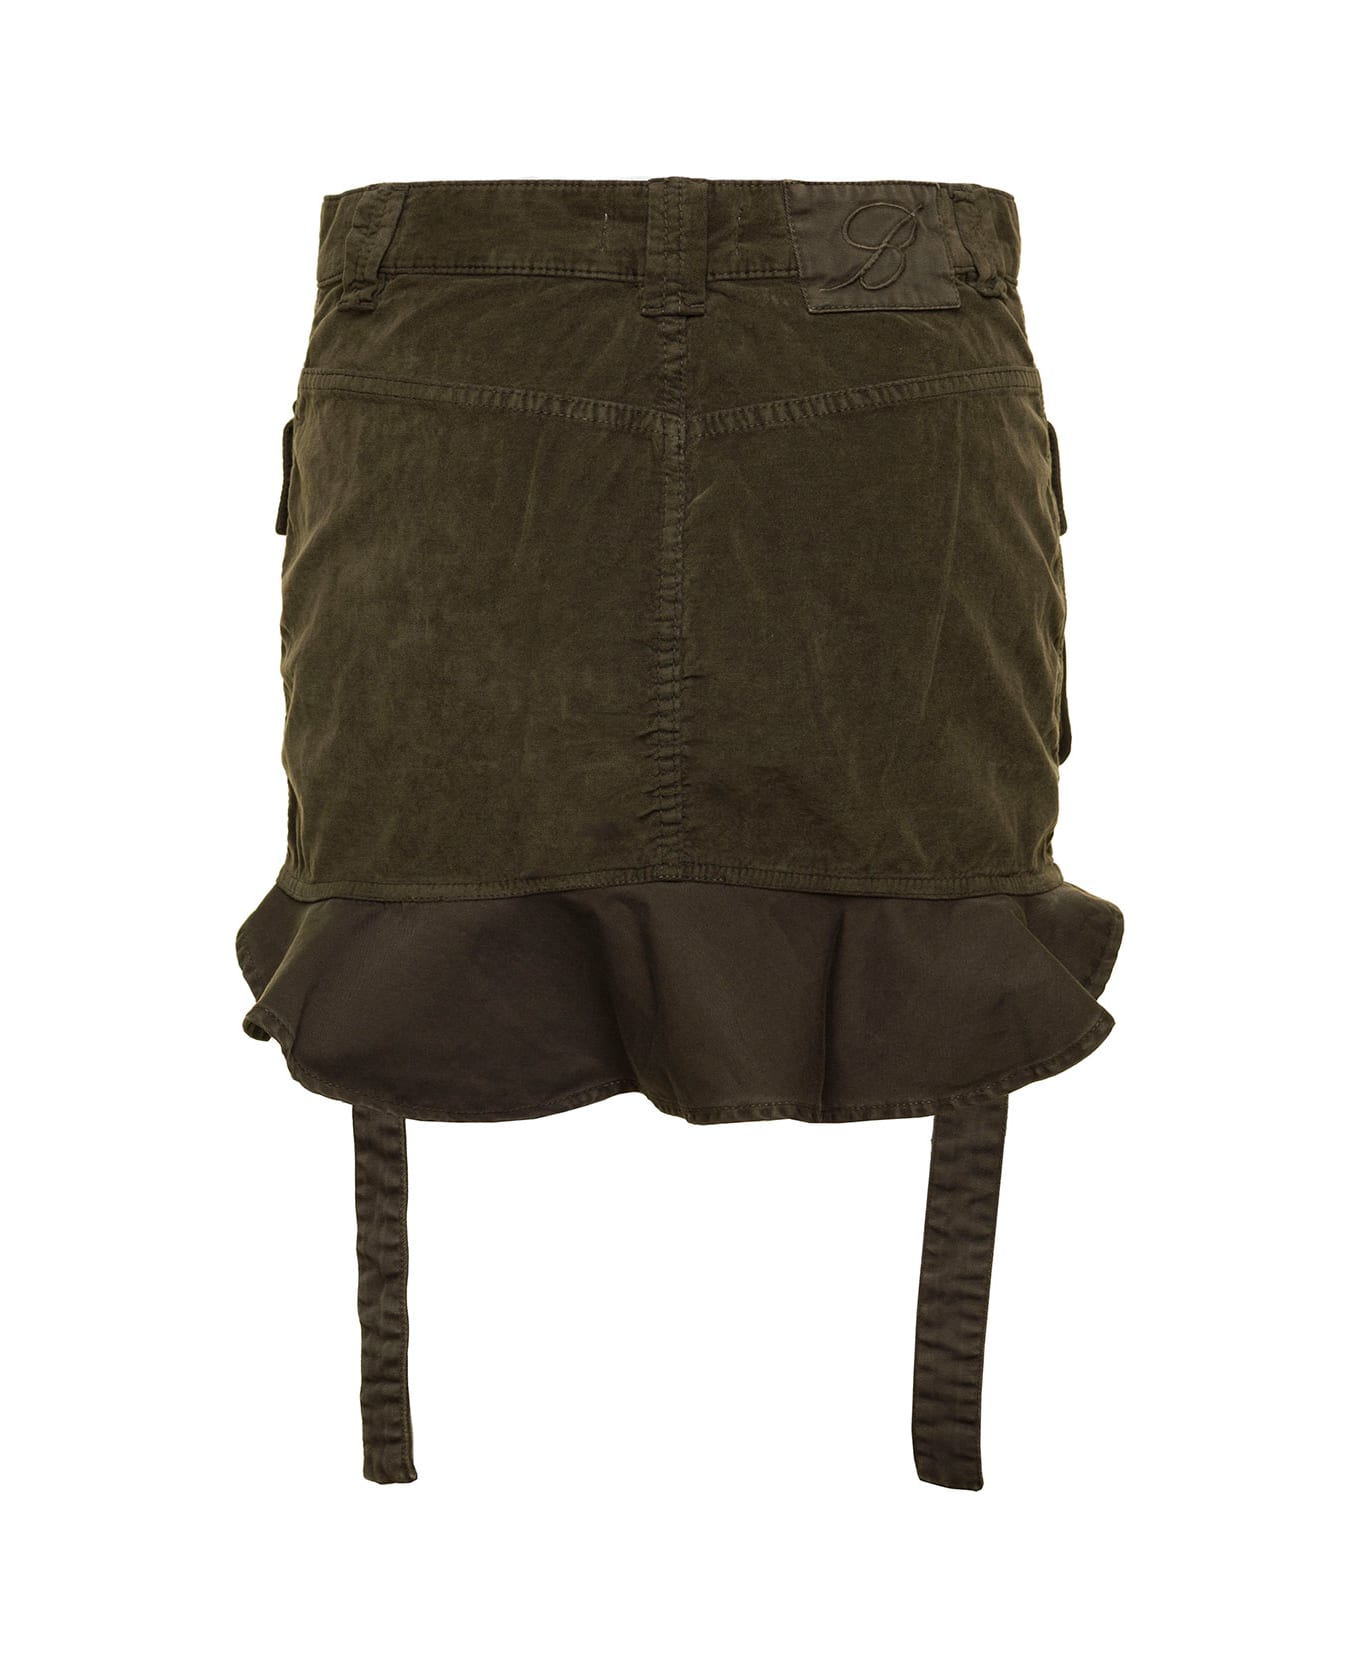 Blumarine Military Green Cargo Mini-skirt With Rear Frill In Velvet Woman - Green